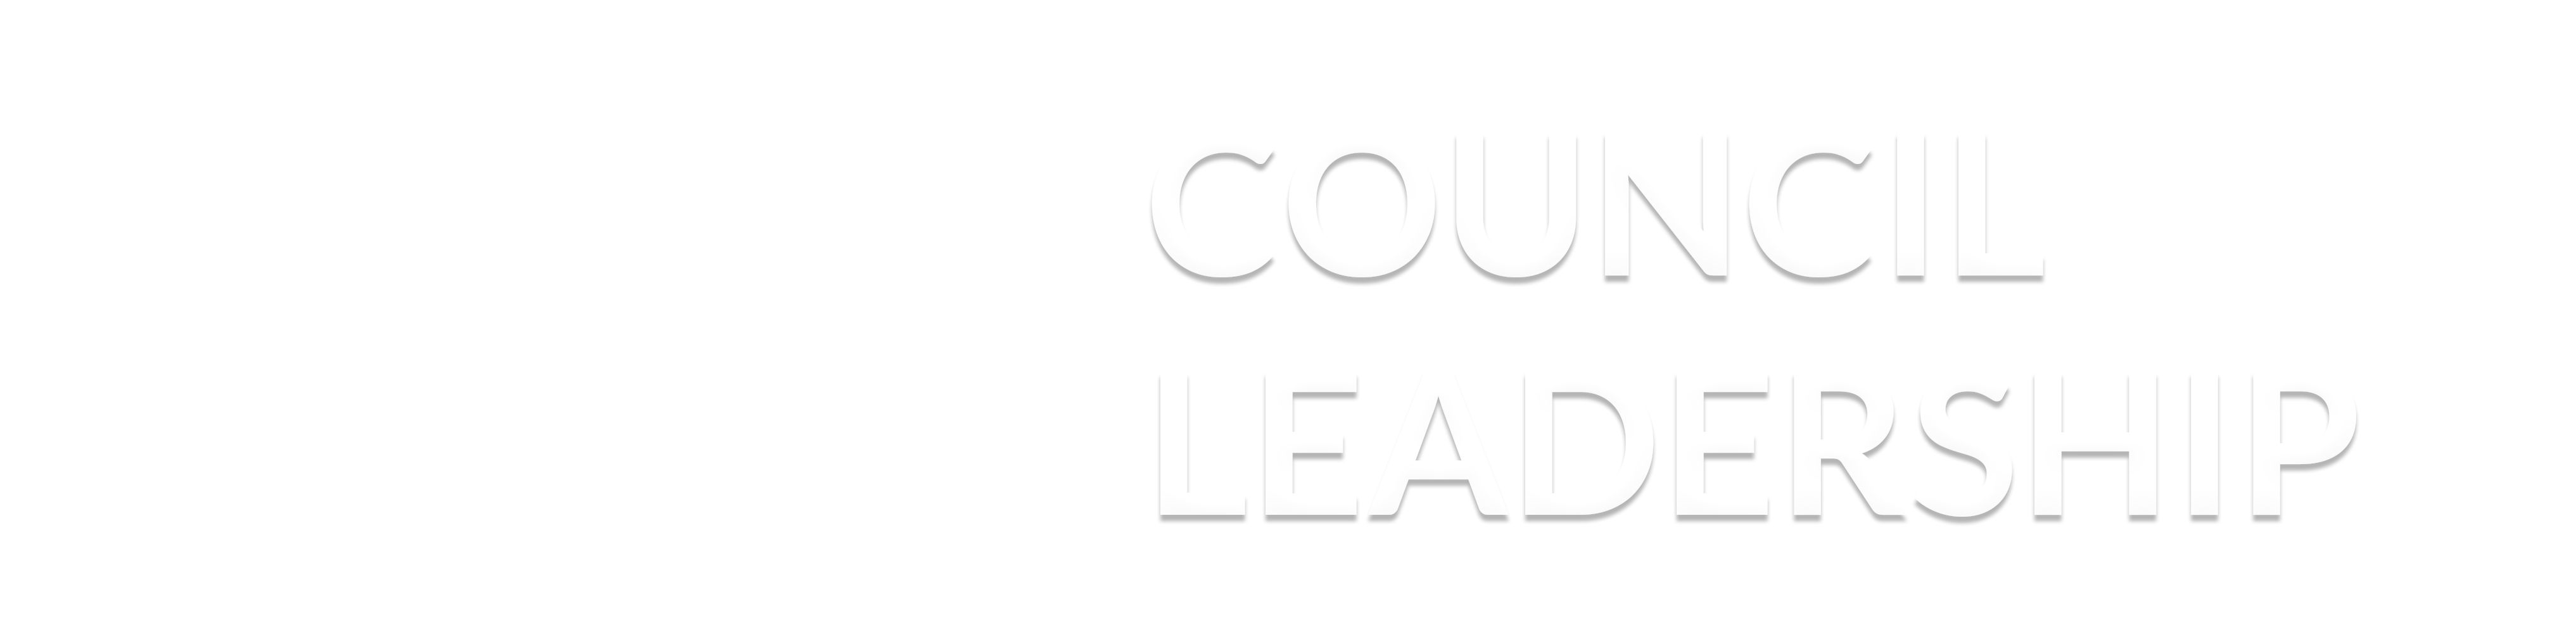 council leadership_text